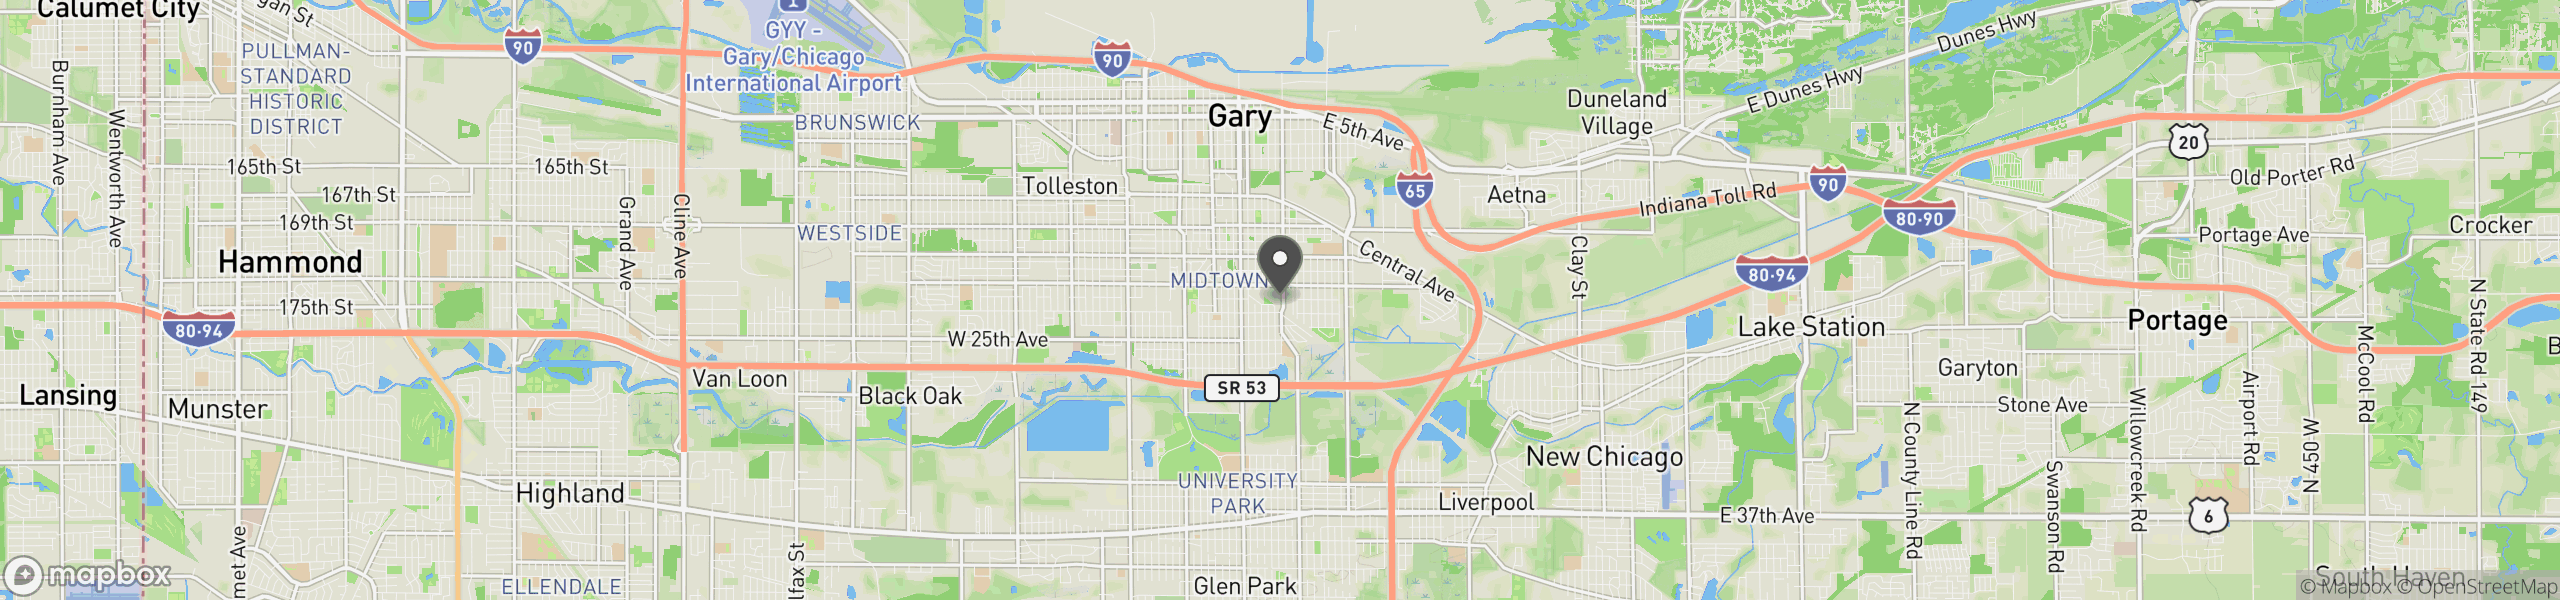 Gary, IN 46407